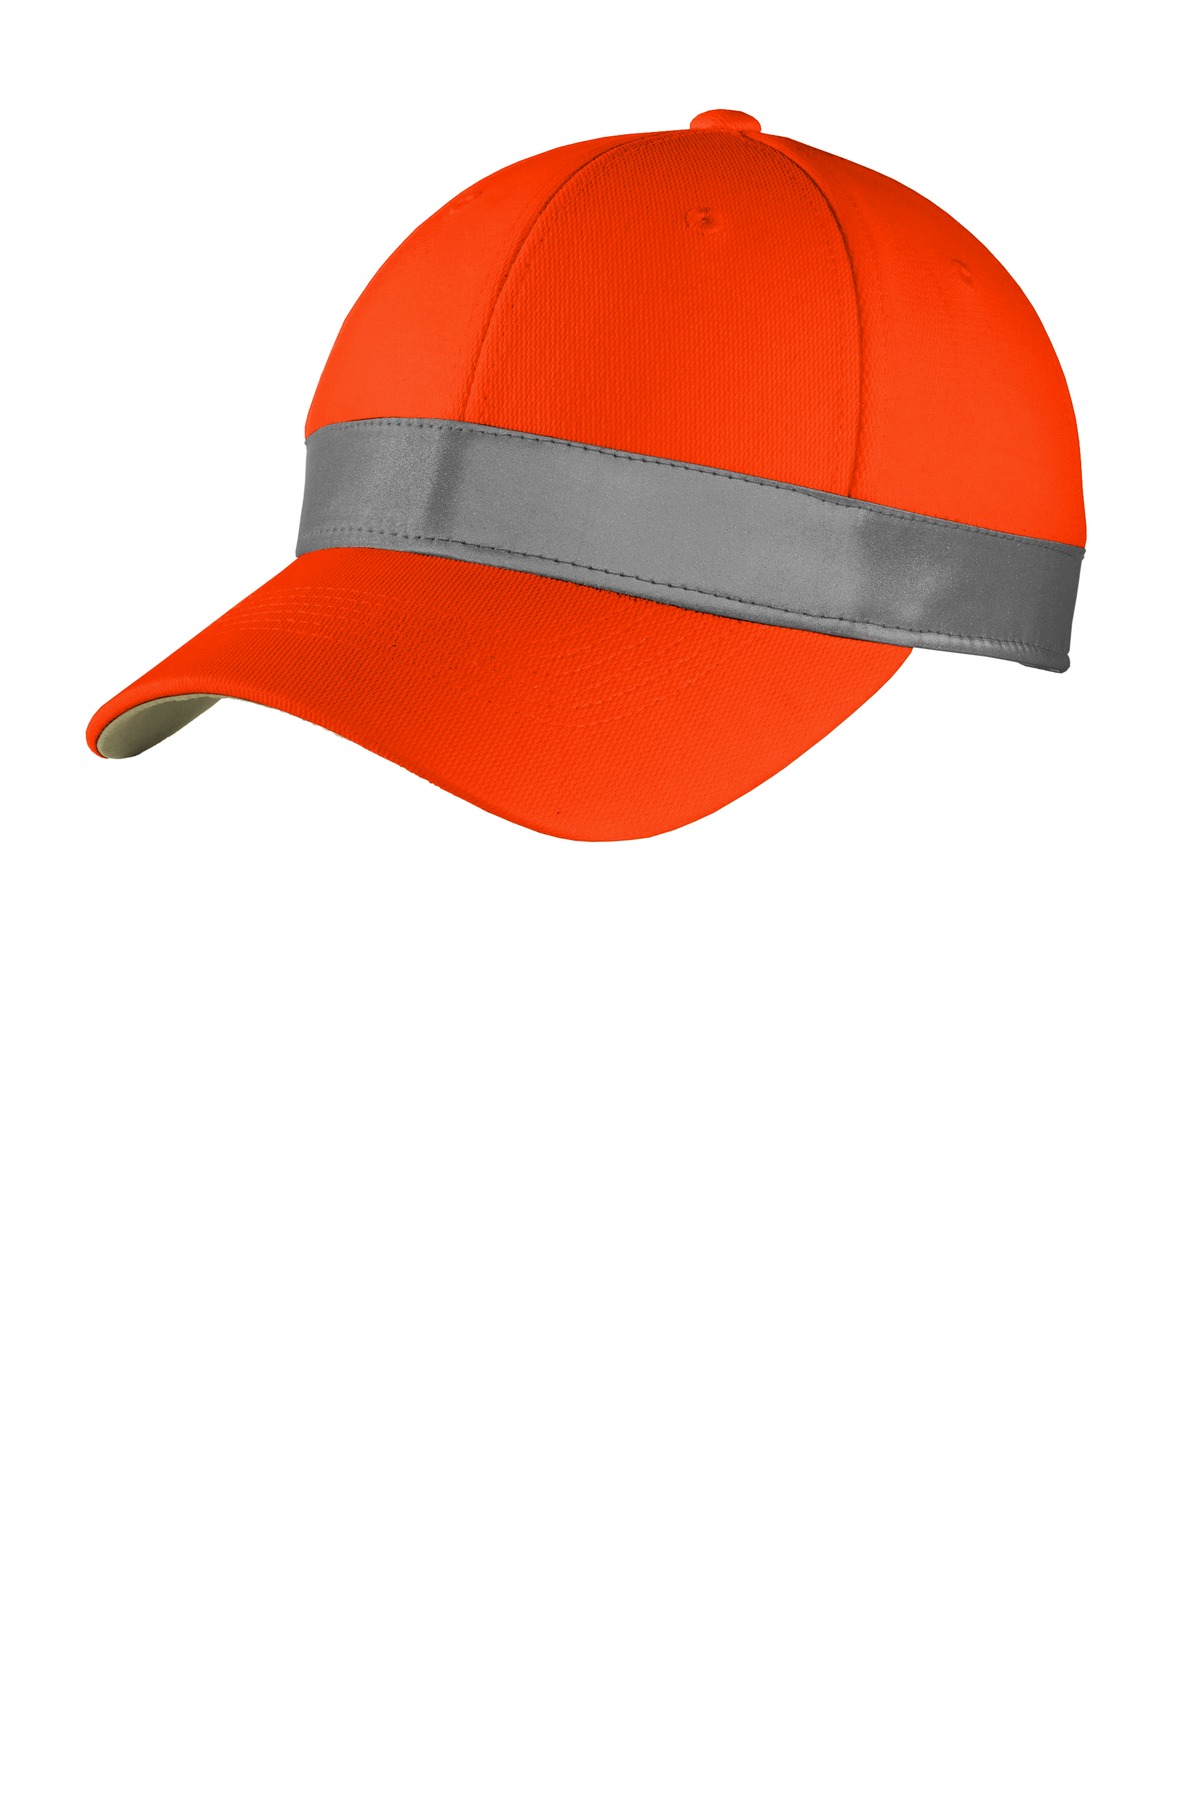 CornerStone Hospitality Caps &Workwear ® ANSI 107 Safety Cap.-CornerStone